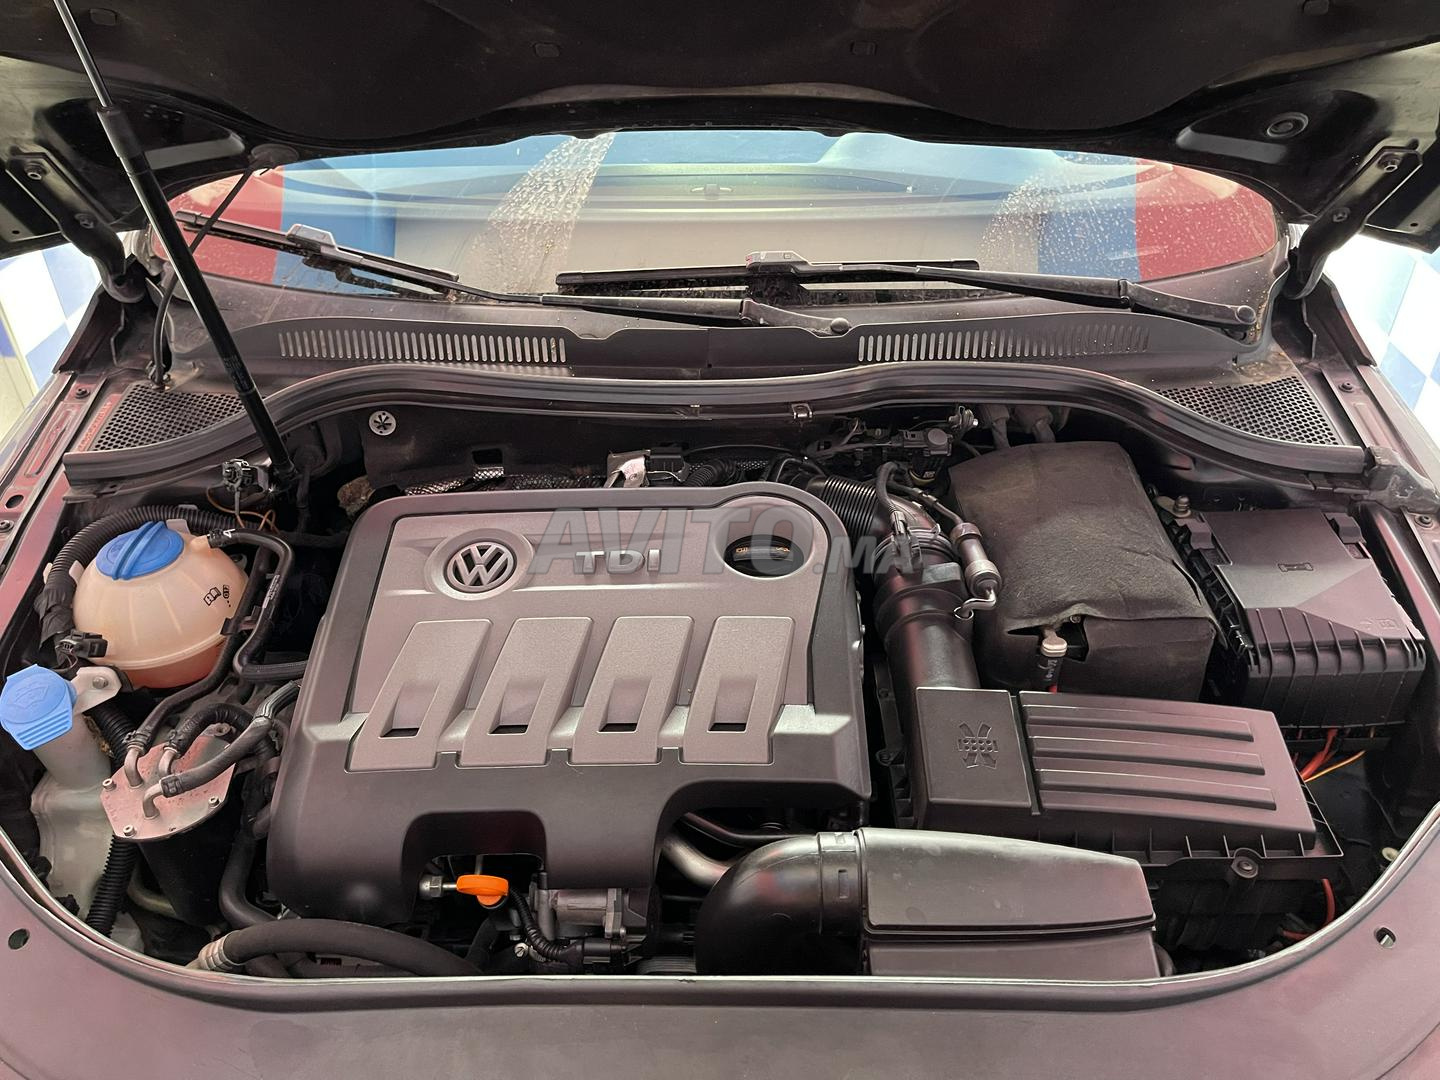 Volkswagen Passat cc model September 2011 - 6